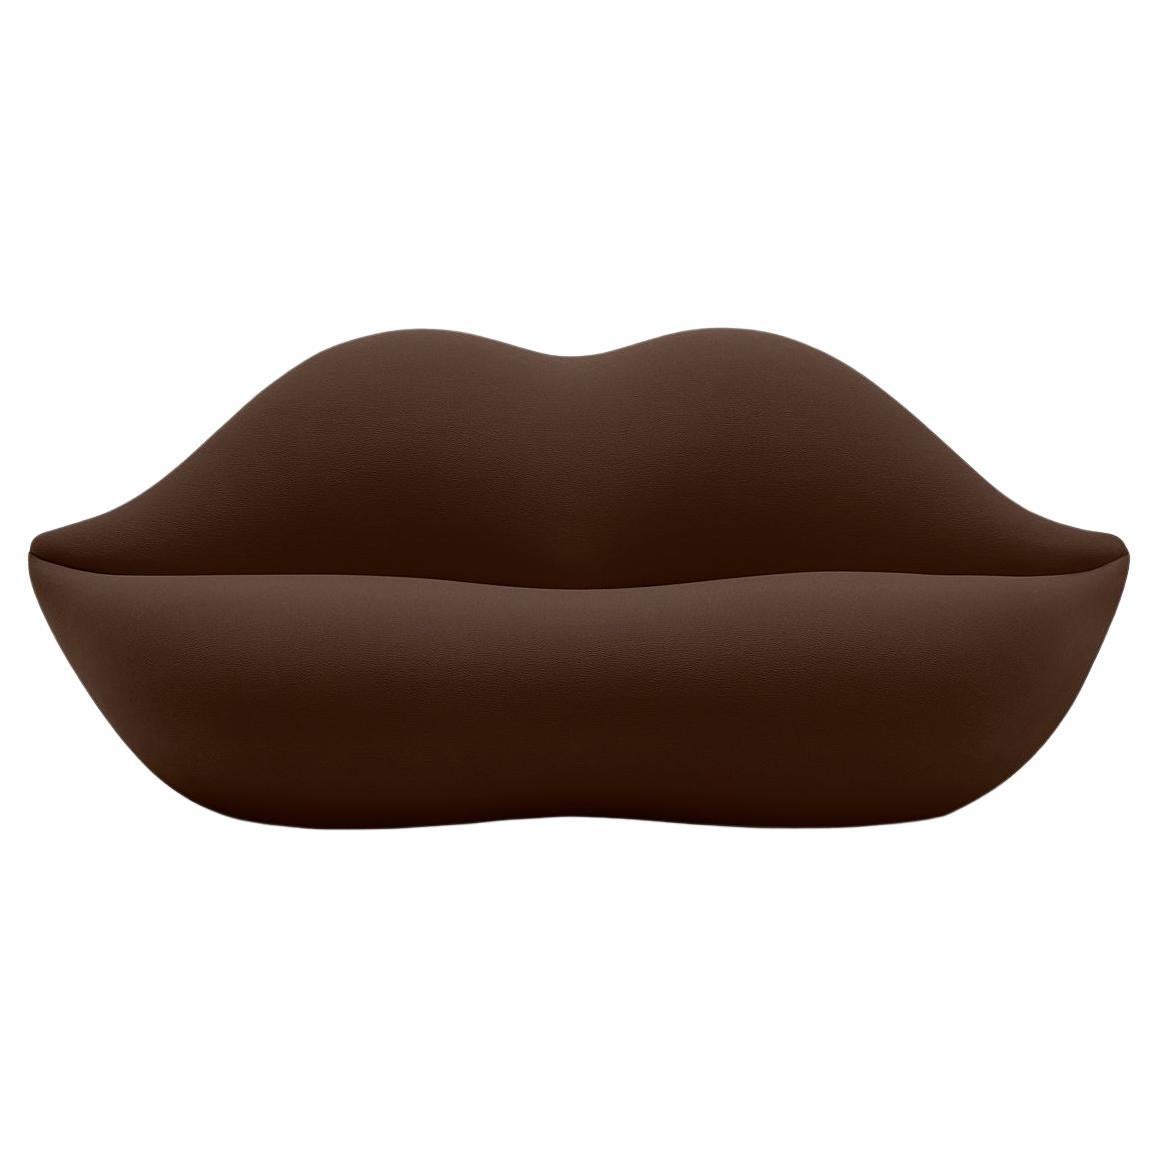 Gufram, Bocca Lip-Shaped Sofa, Chocolate, by Studio 65 For Sale